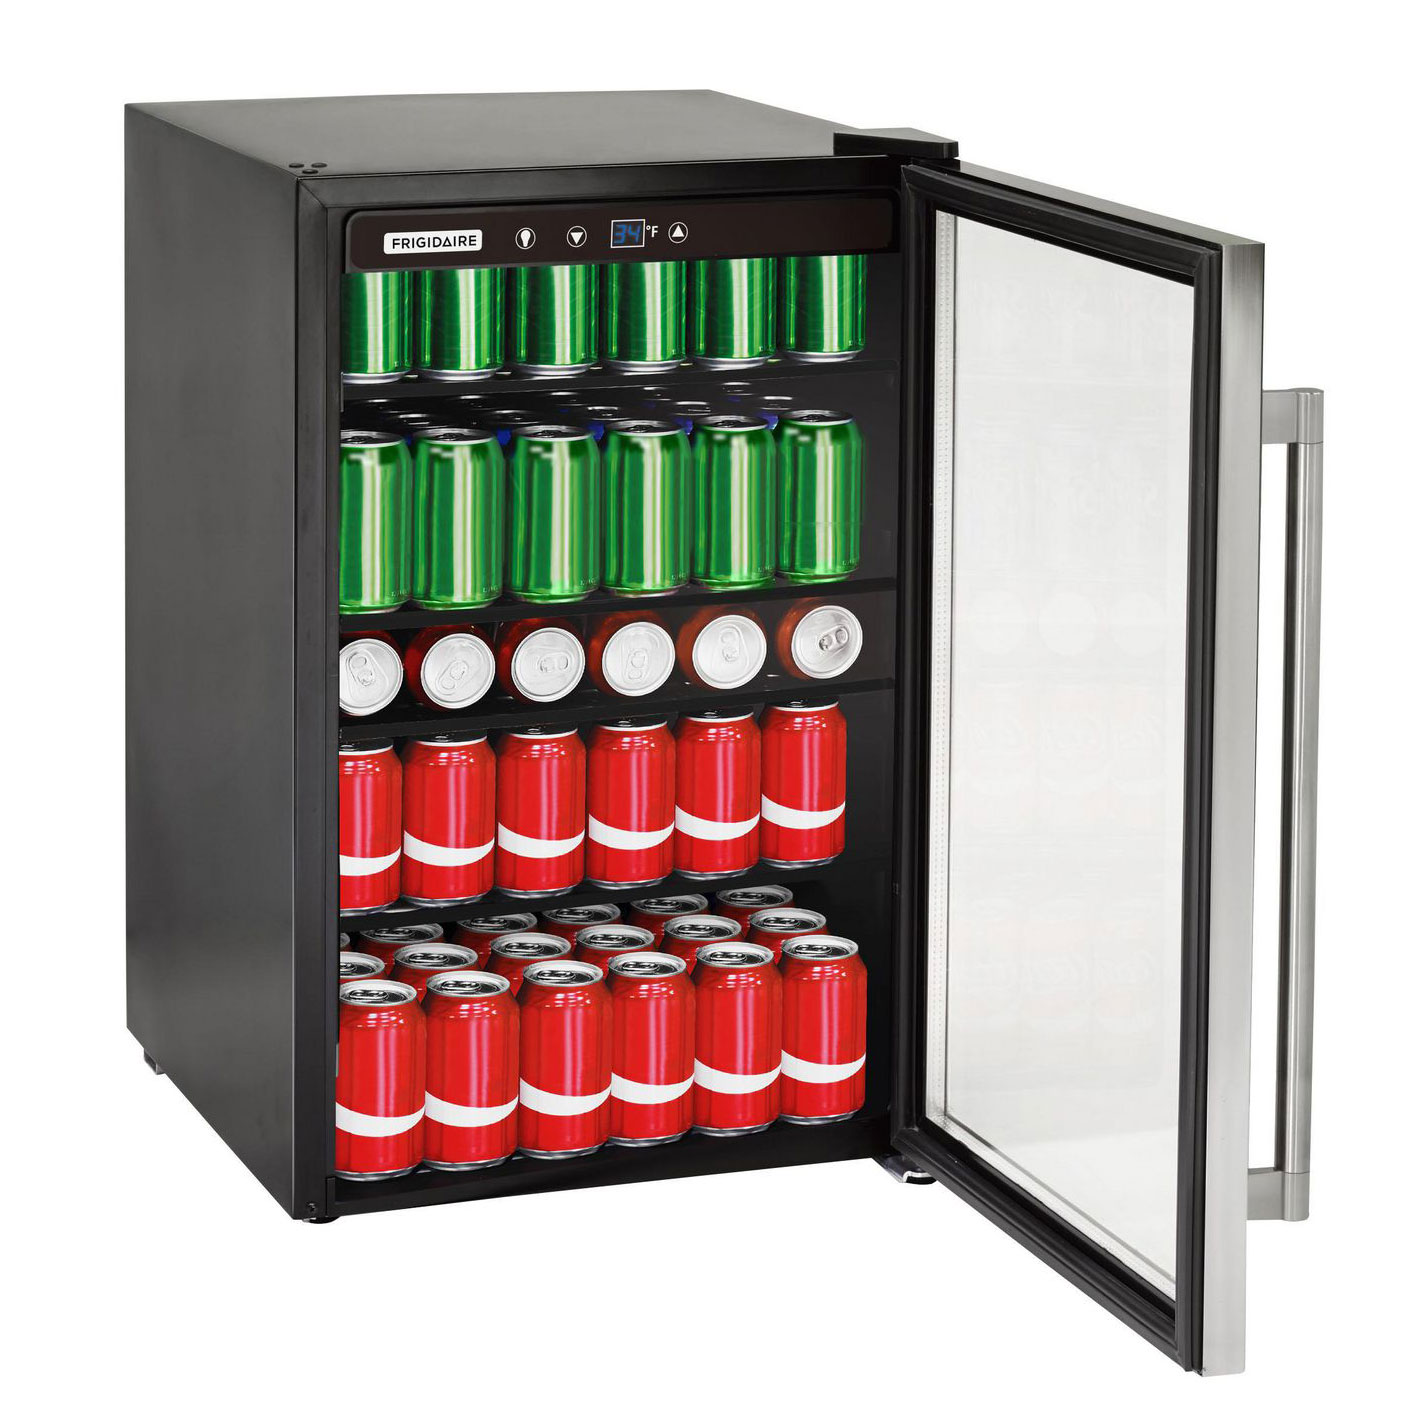  Frigidaire  126 Can Beverage Mini  Fridge  Refrigerator 